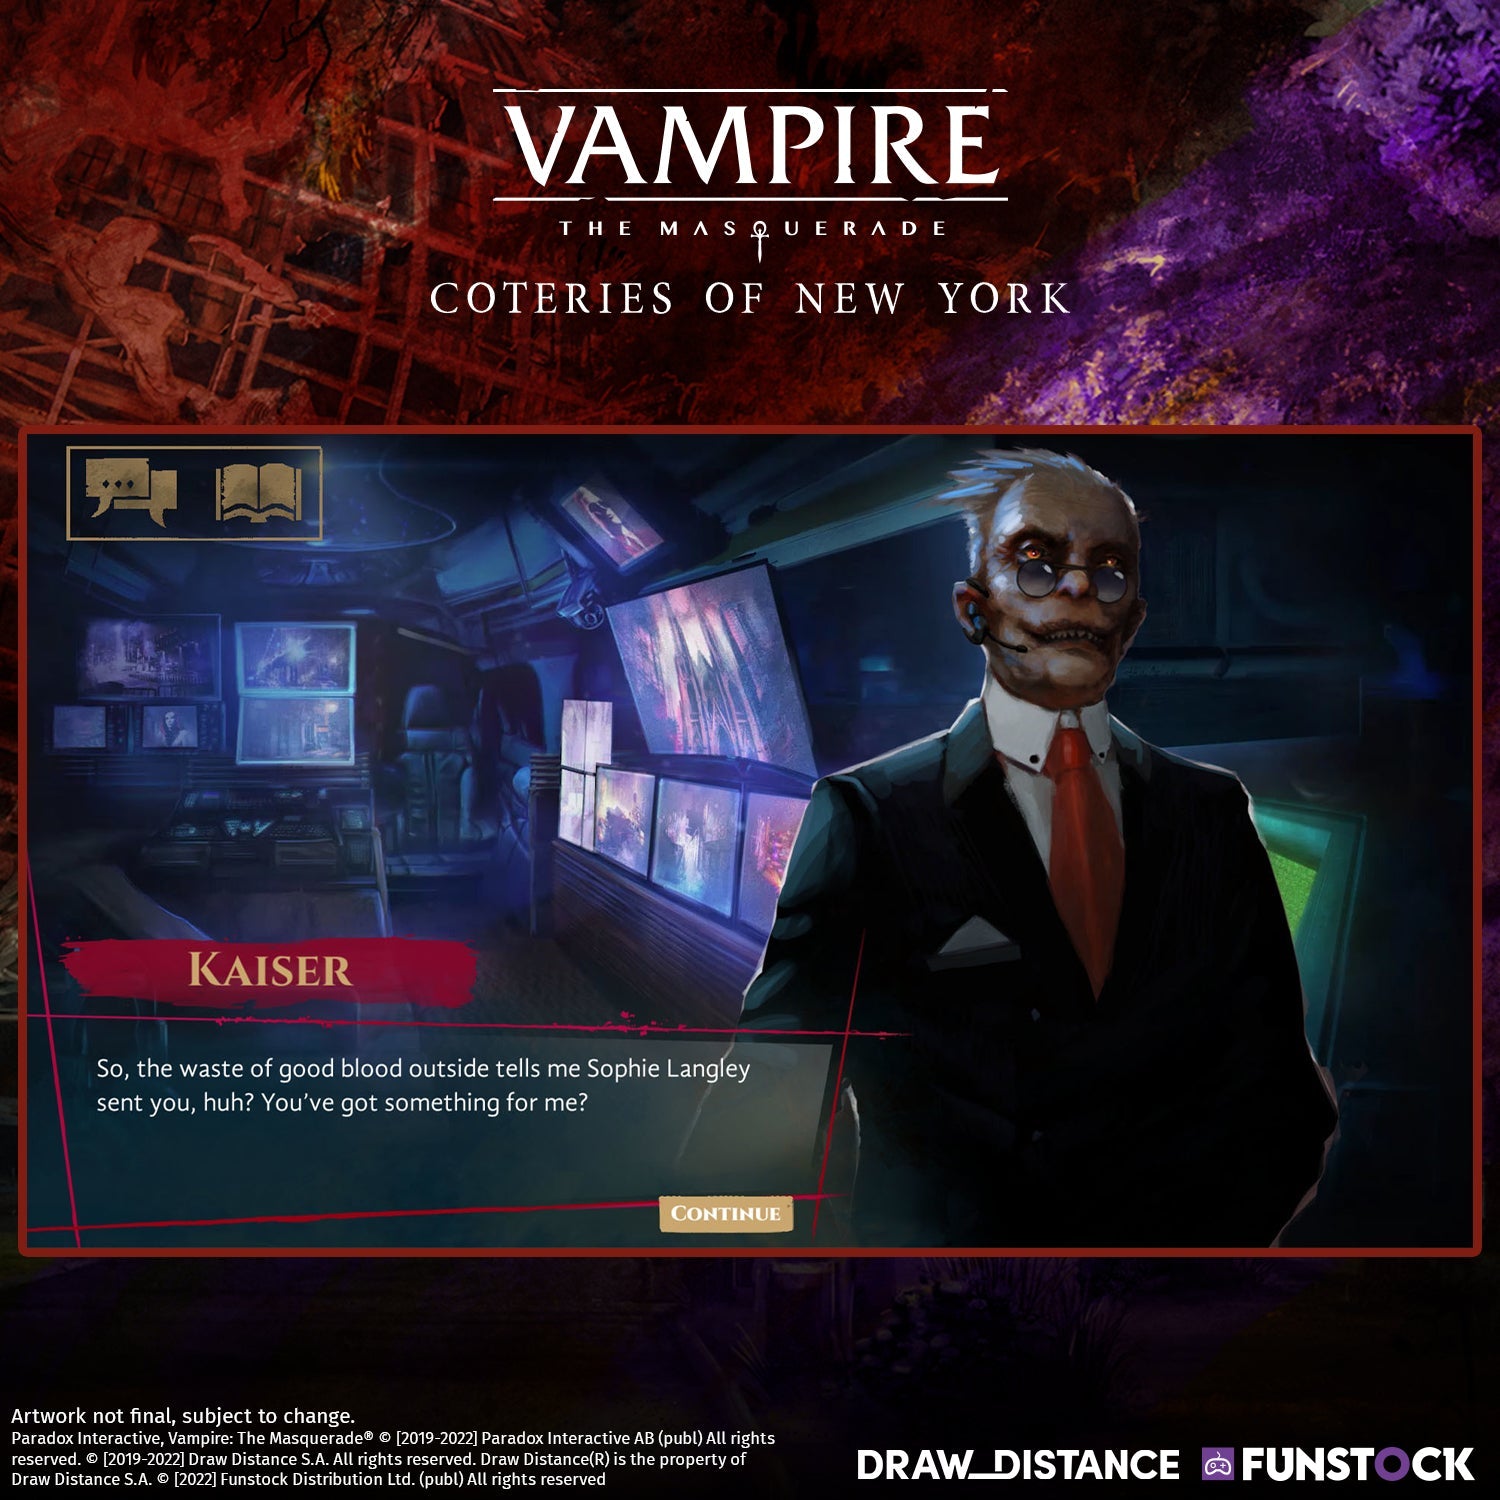 Dmm Games Vampire The Masquerade Coteries Of New York Playstation 4 Ps